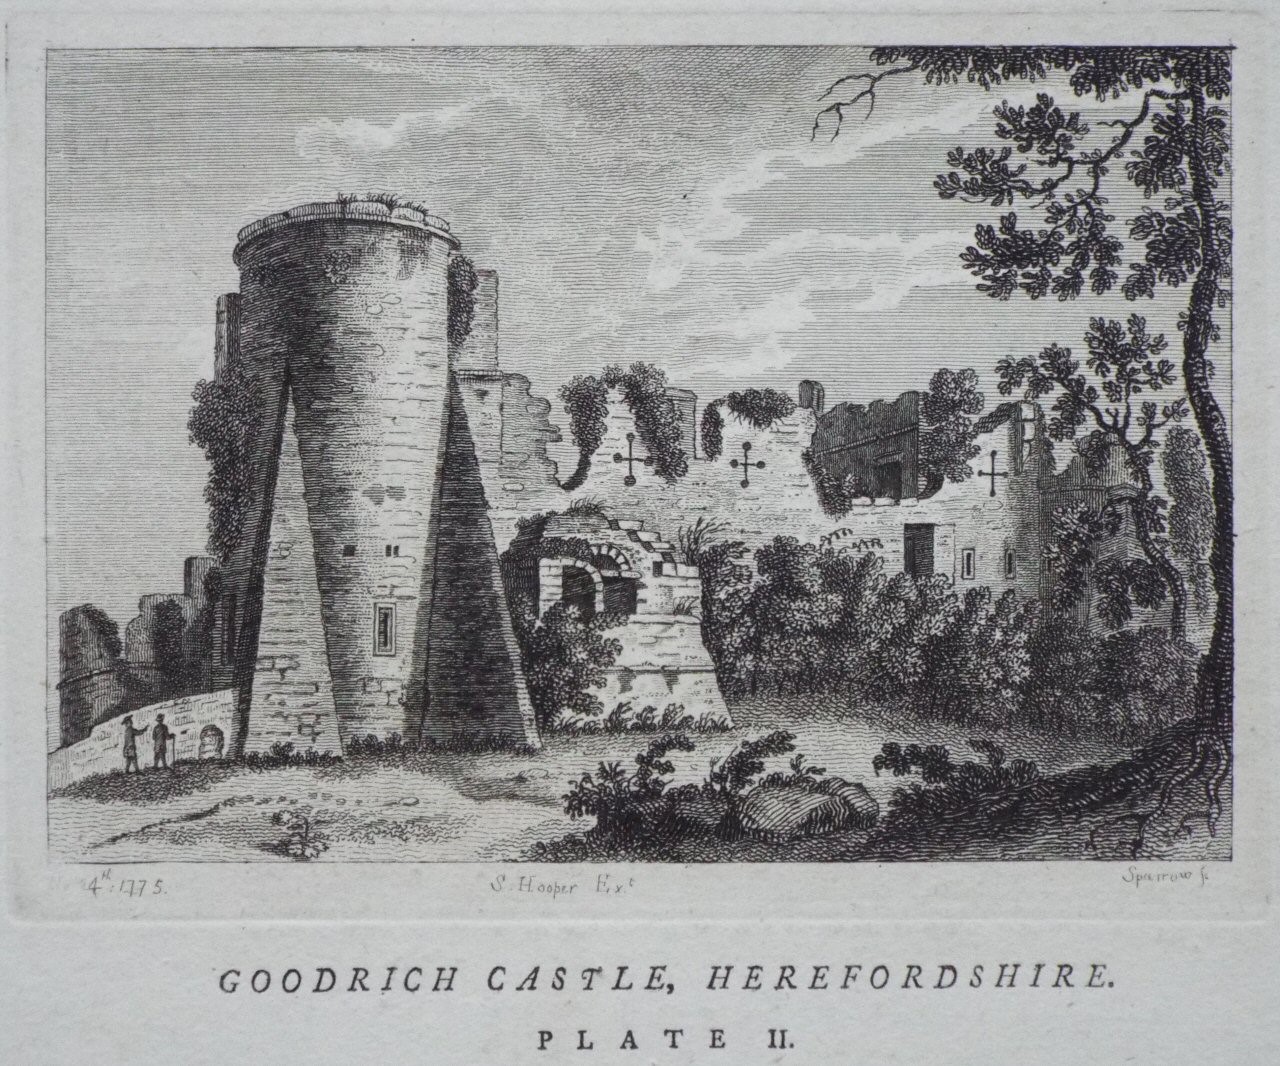 Print - Goodrich Castle, Herefordshire. Plate II - 